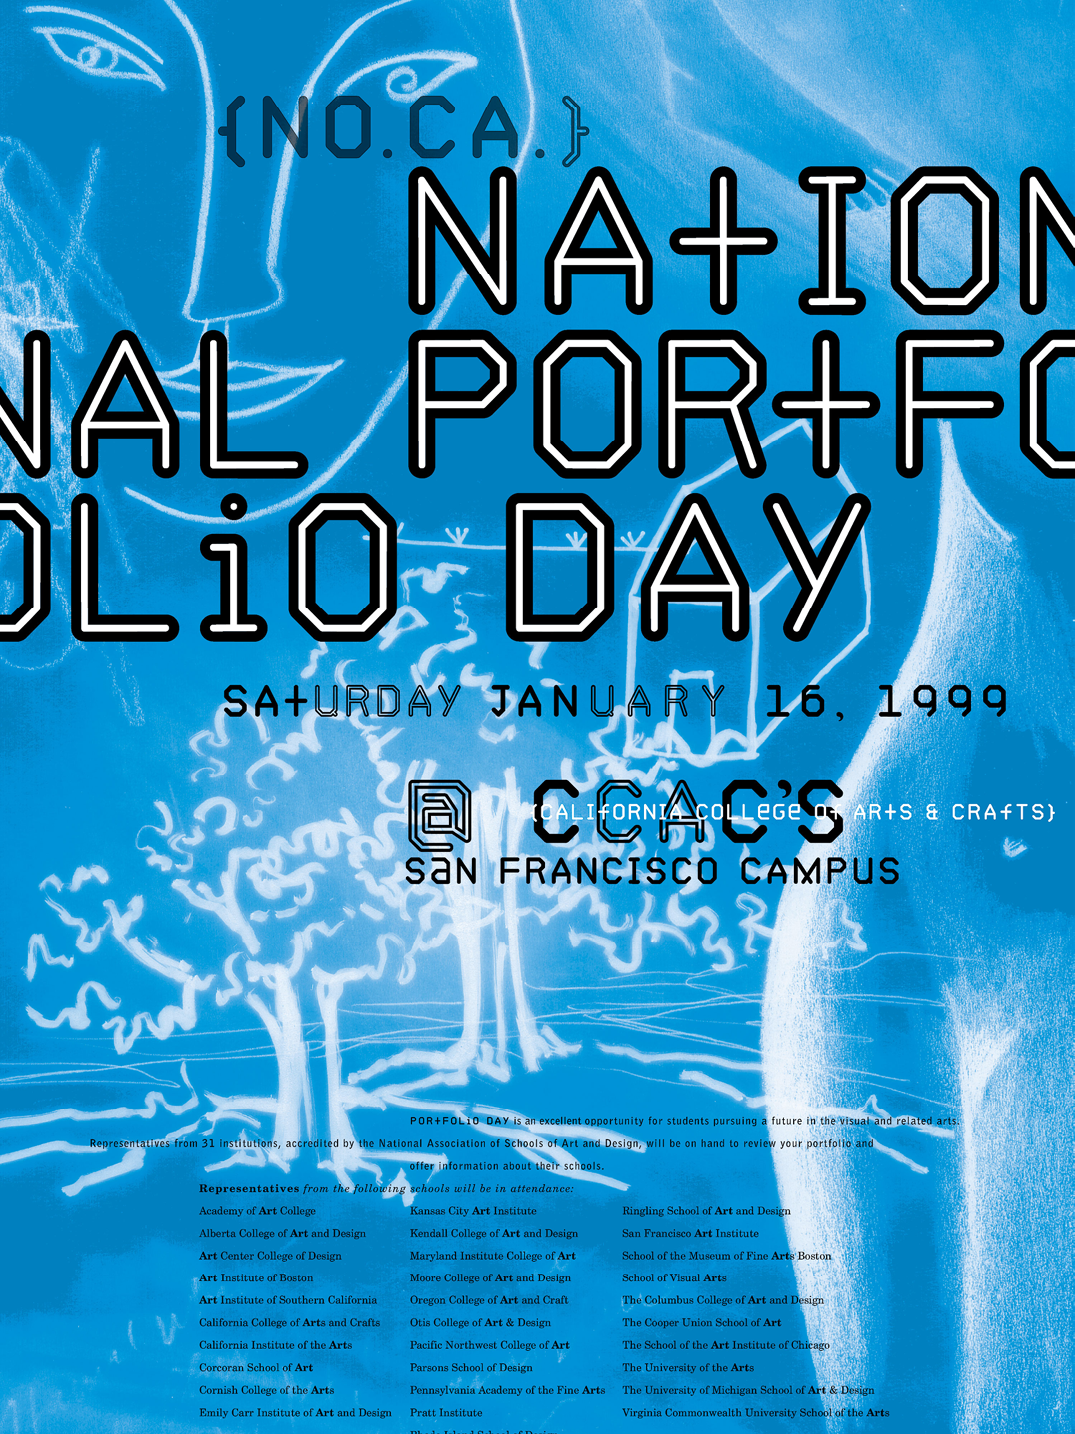 CCAC_Portfolio_day_1999_thumbnail.png